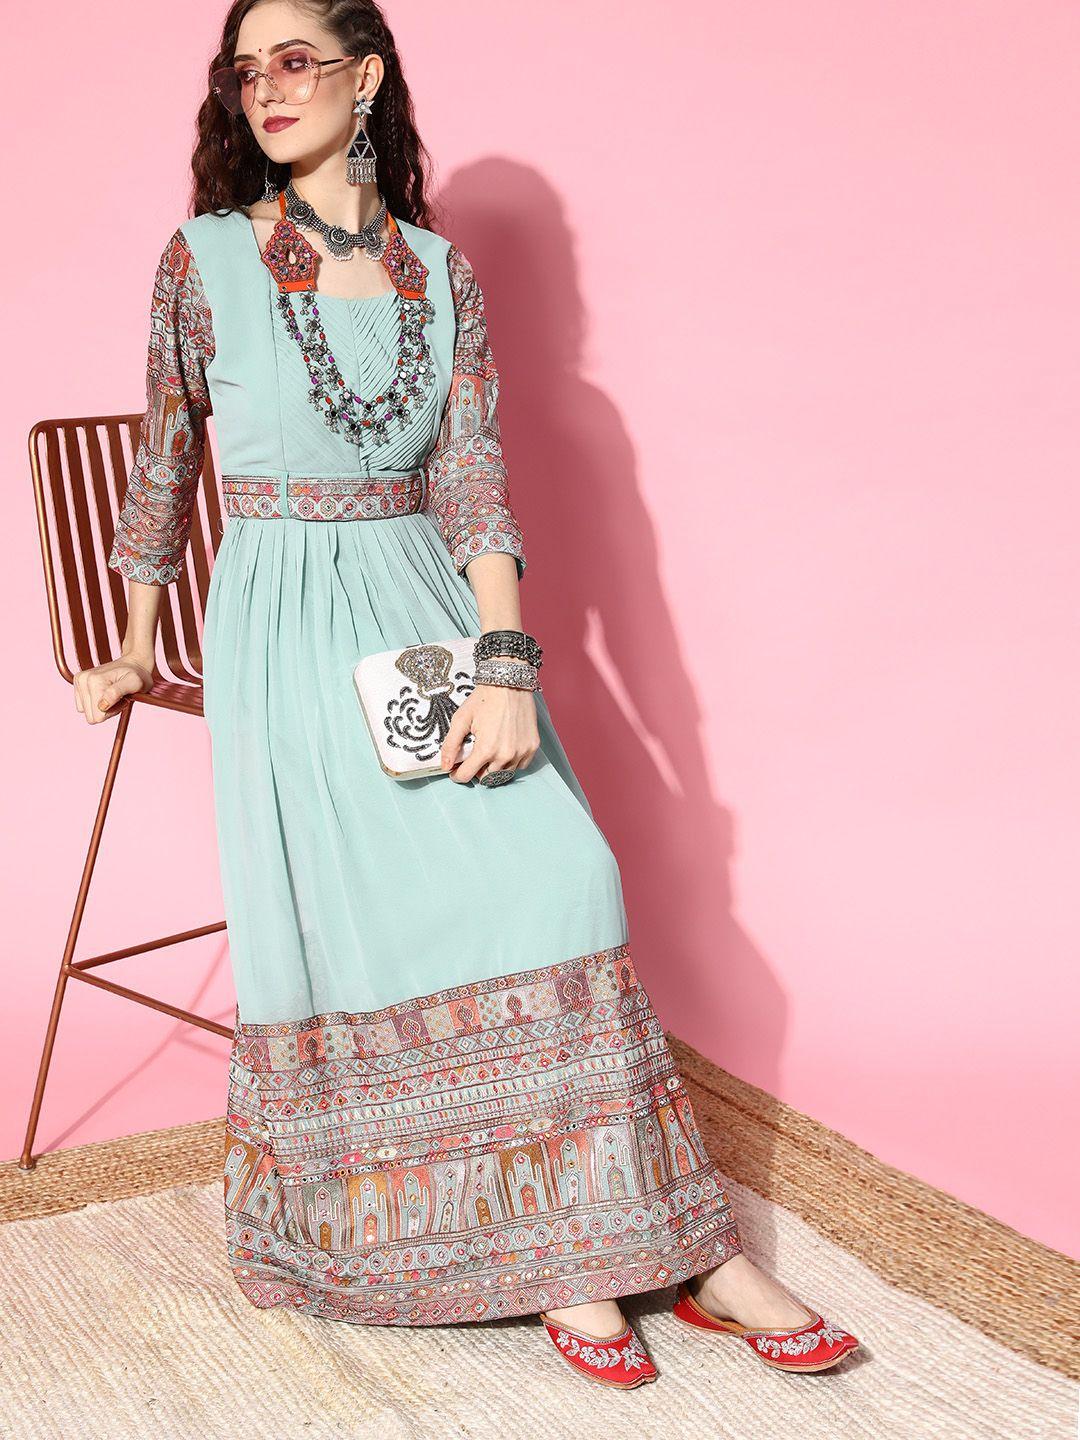 kvsfab women turquoise blue ethnic motifs gown for days